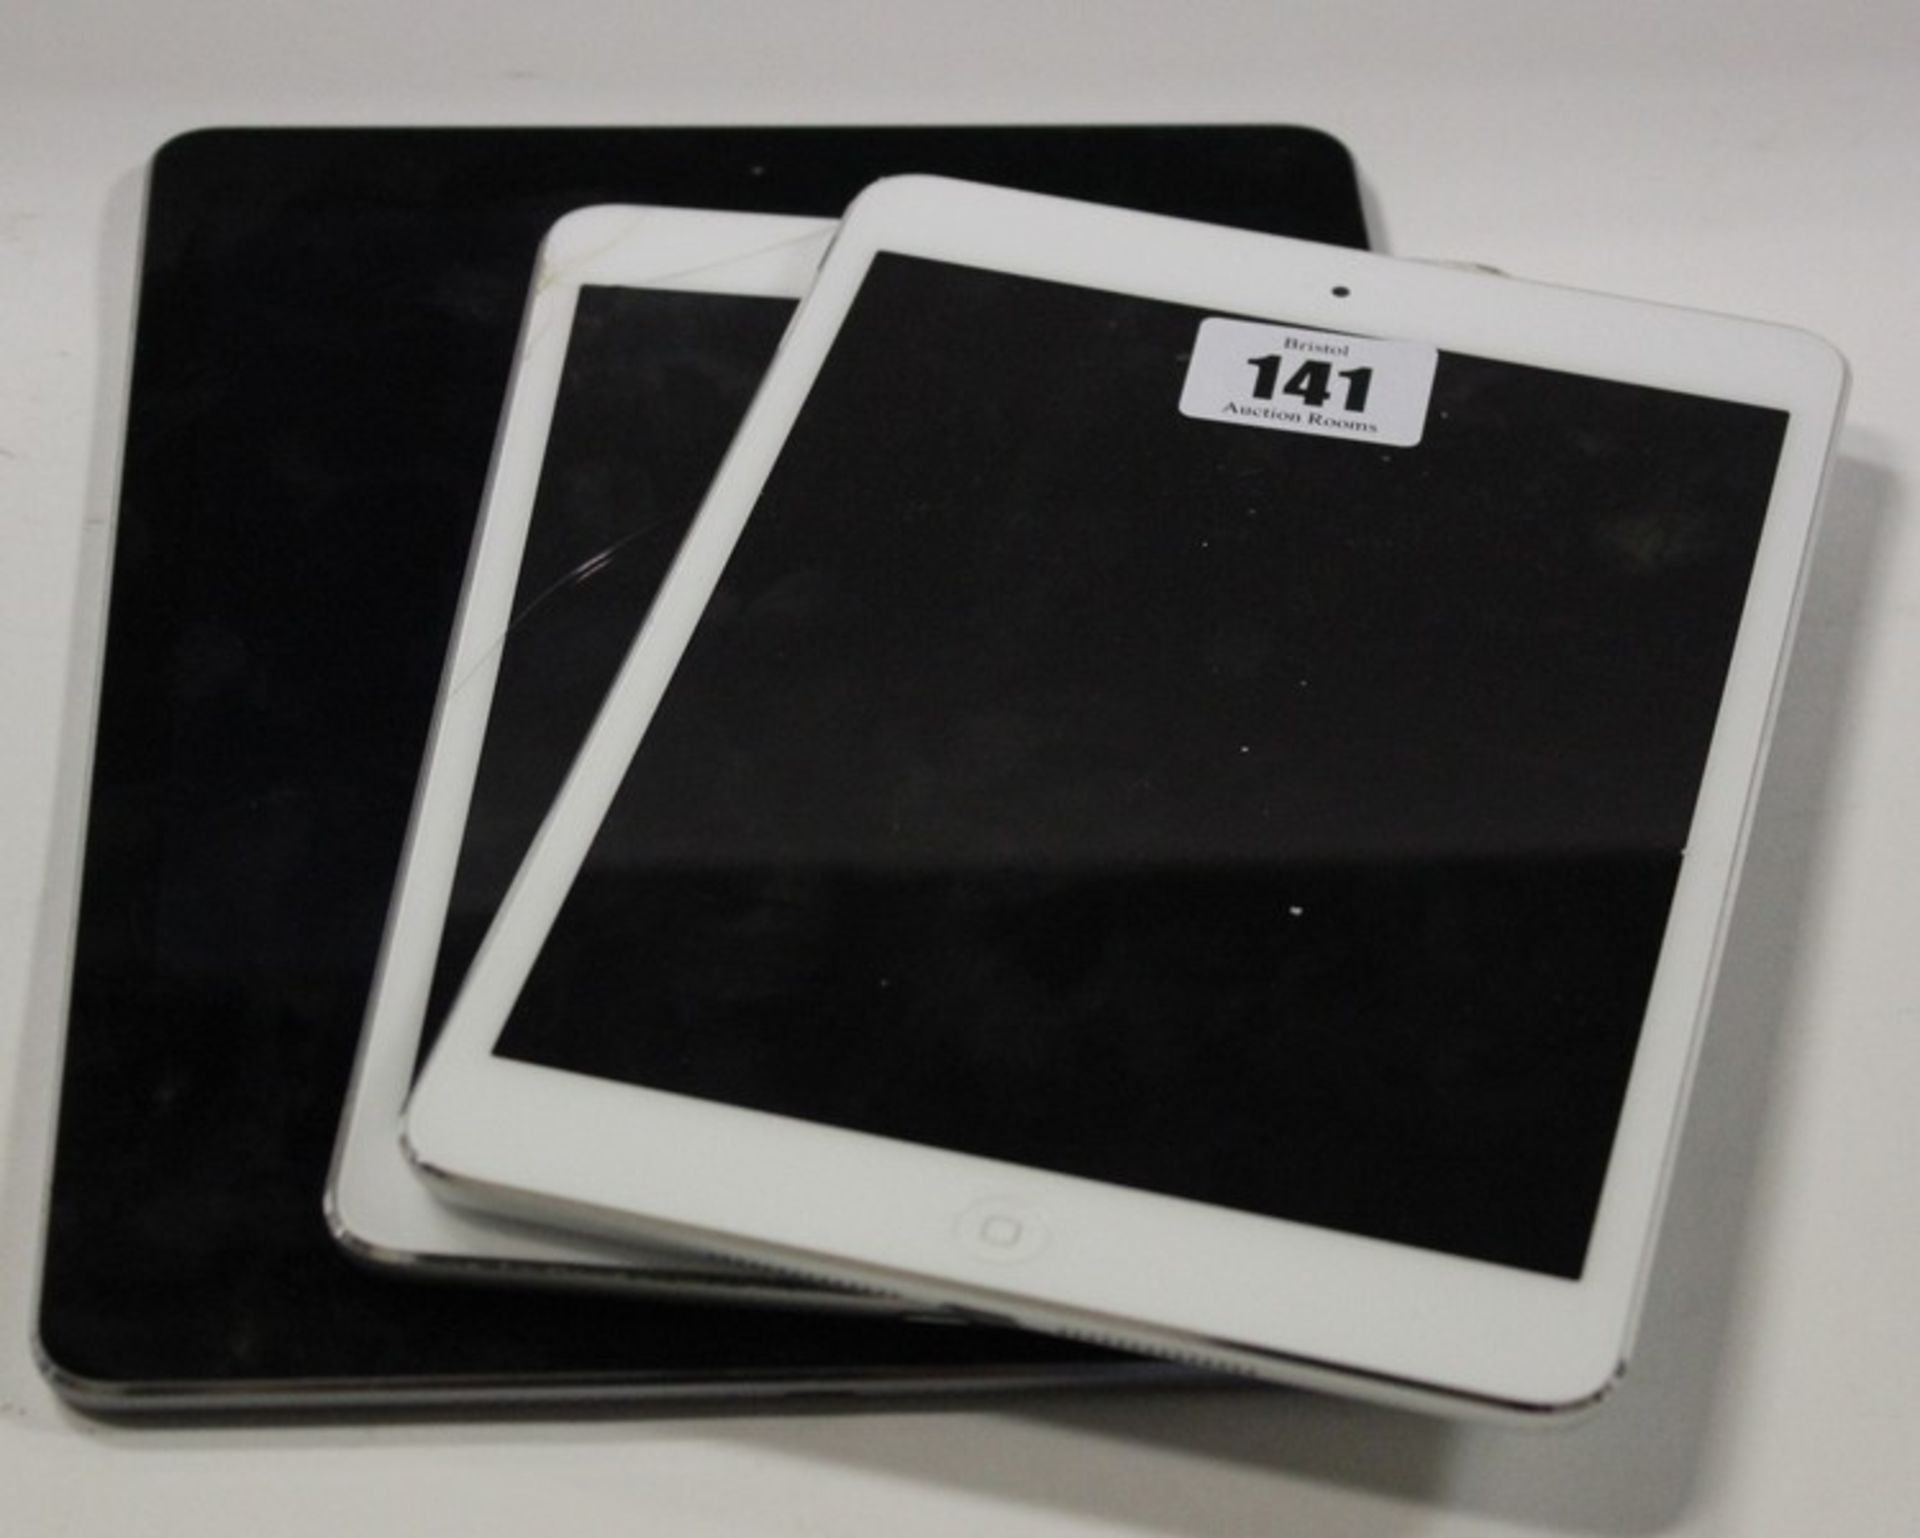 An iPad Air 2 A1566 serial: DMPNN05JG5W1 (Activation locked) and two iPad Mini 2 A1489 serial: